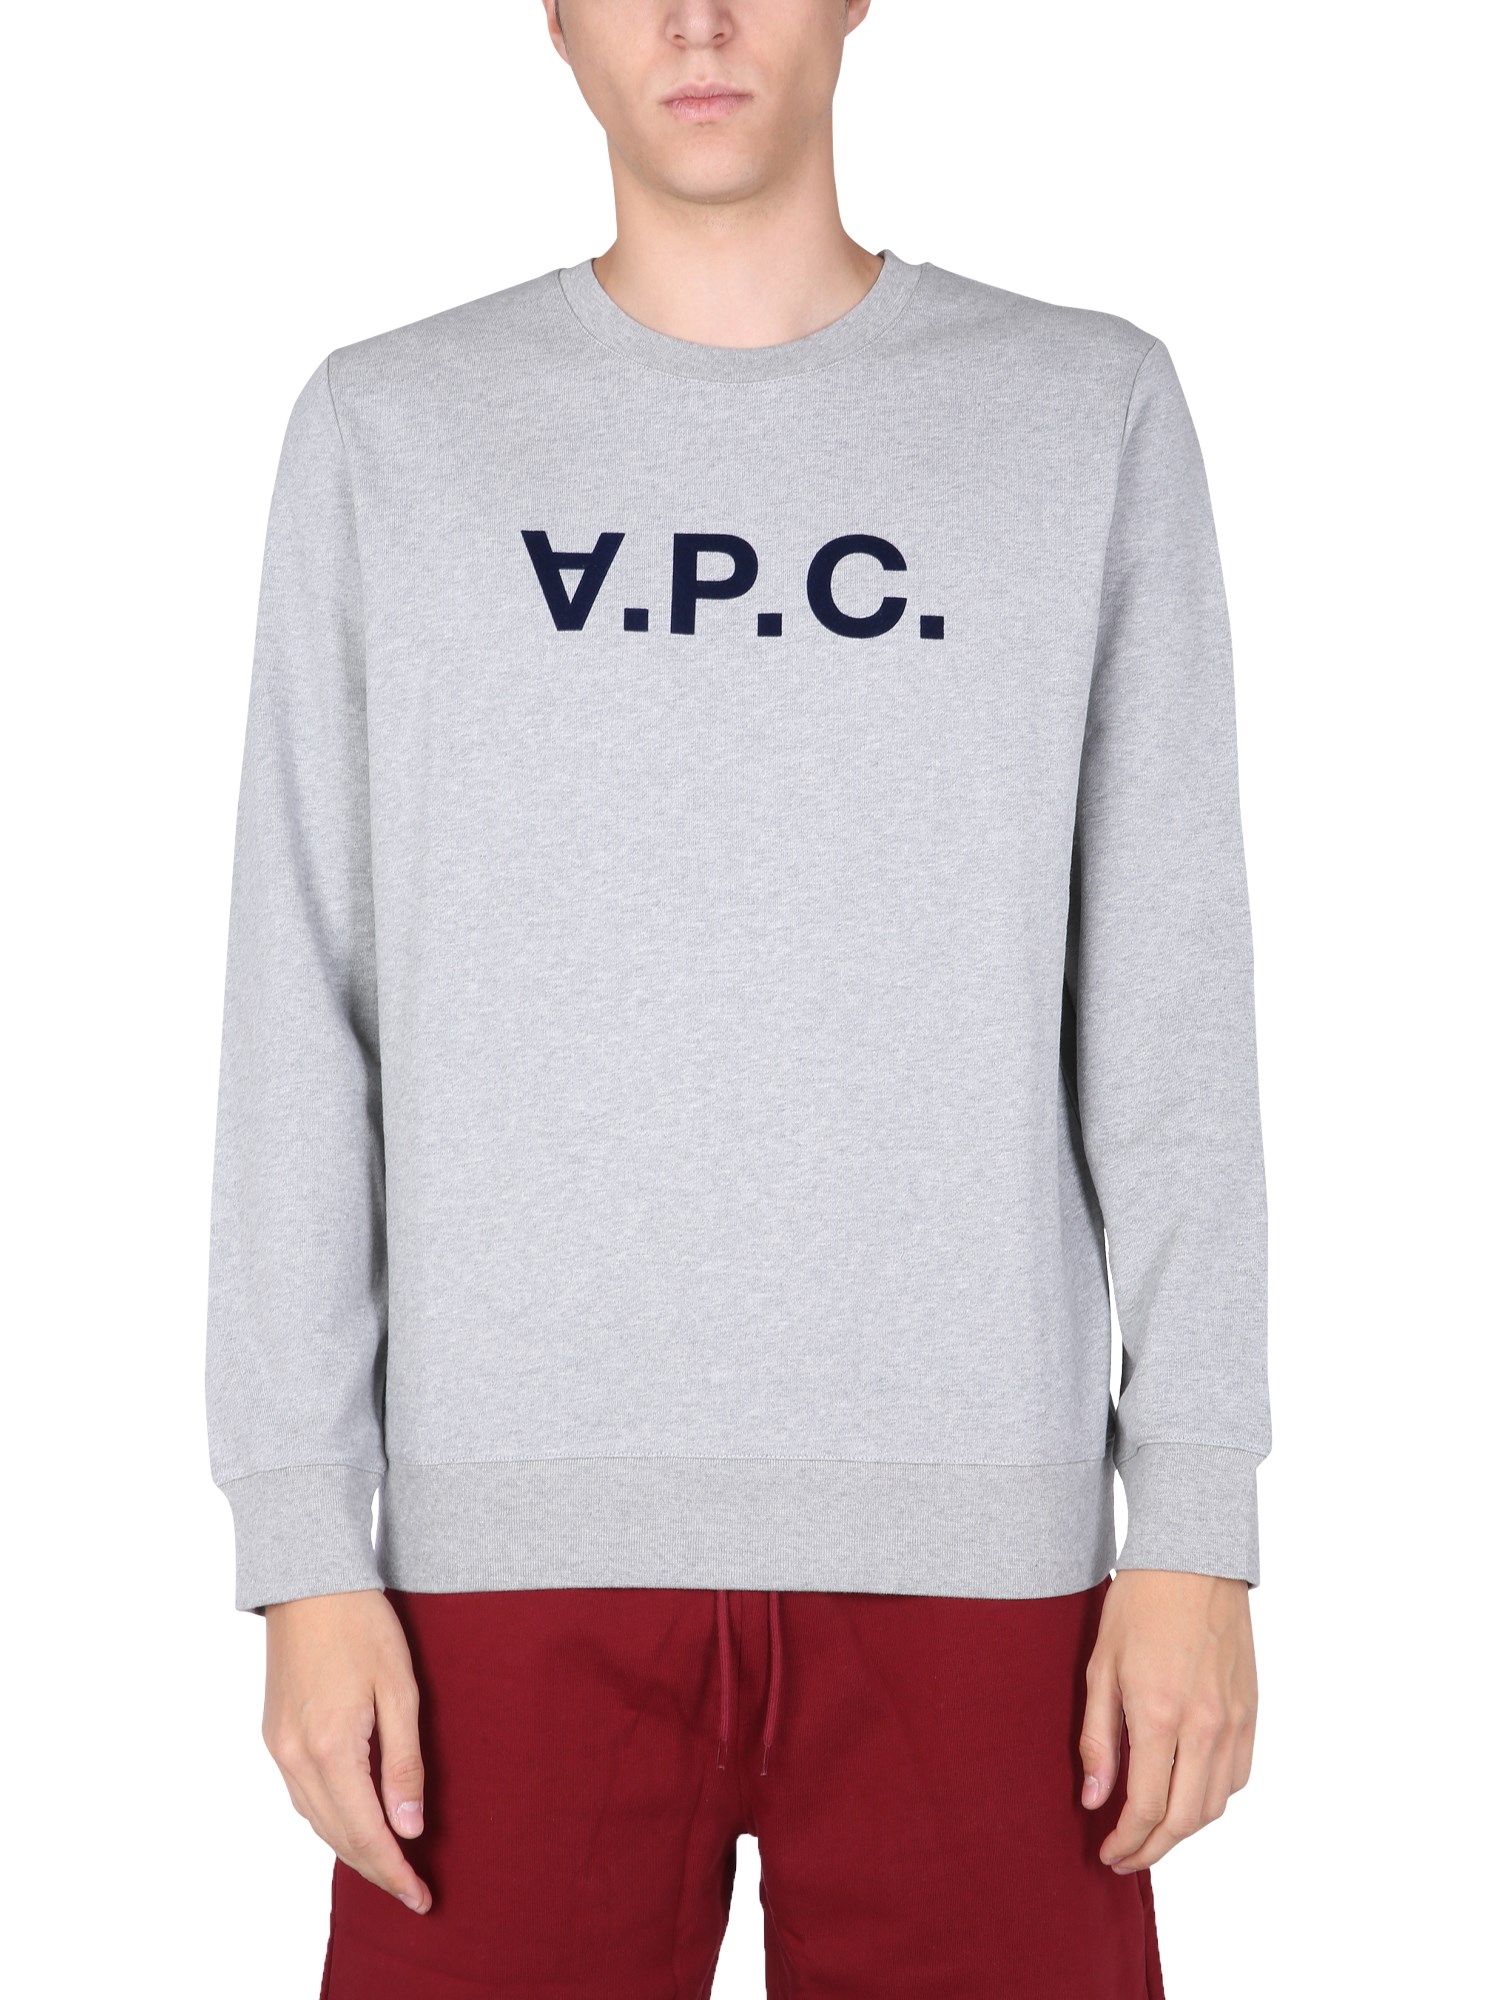 a.p.c. sweatshirt with flocked logo